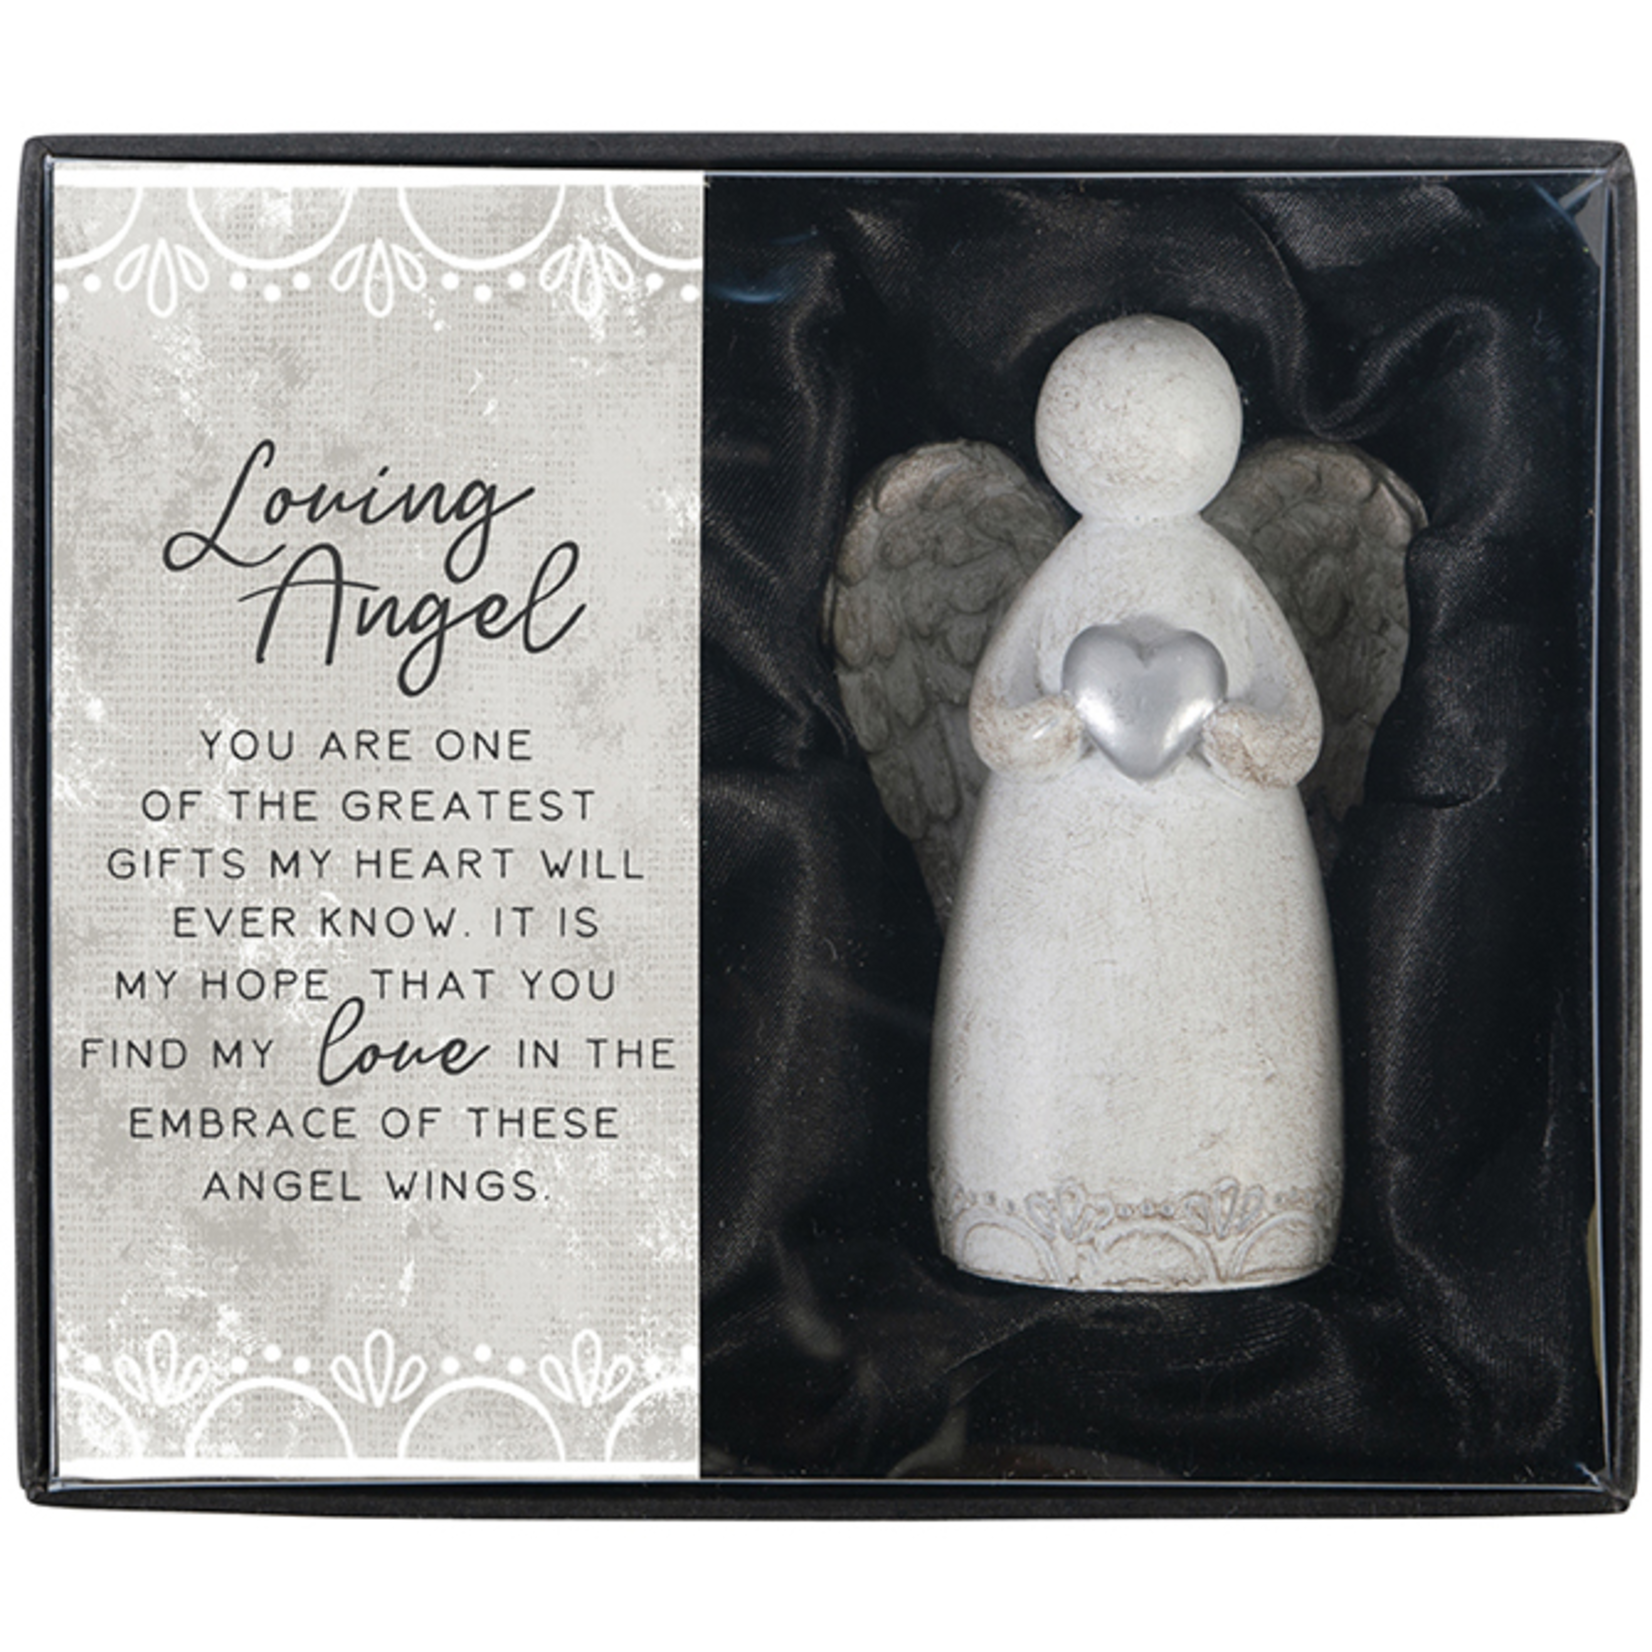 Carson Gift Boxed Angel “Loving”